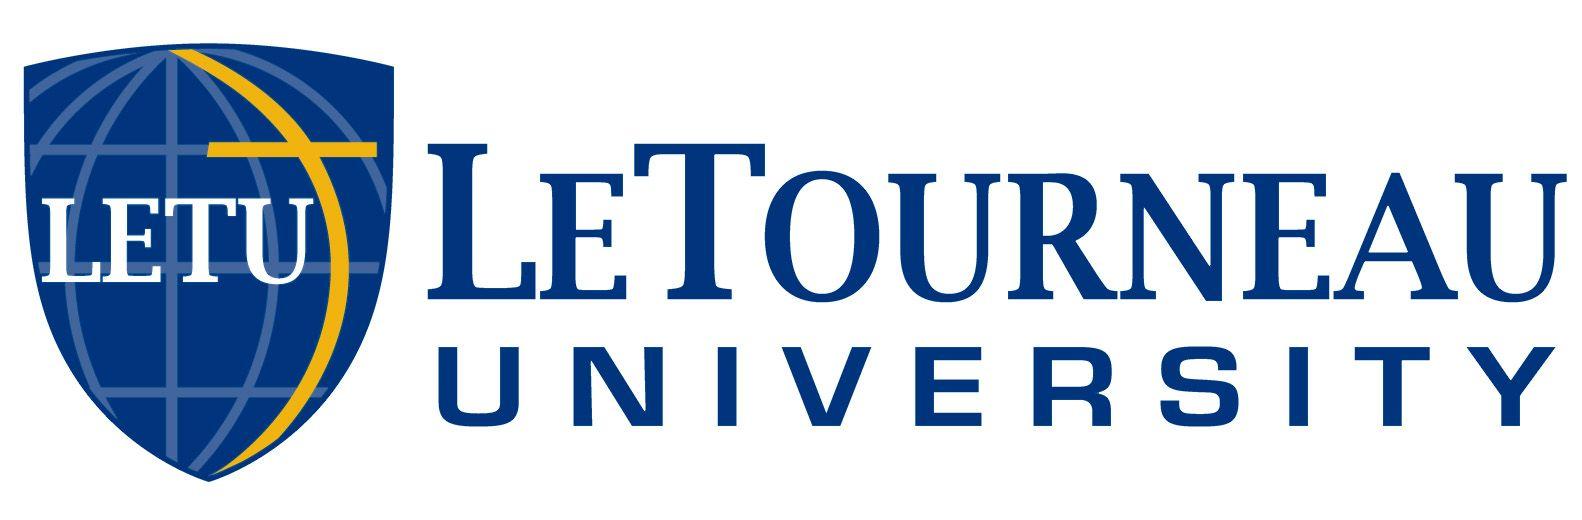 Le Tourneau Logo - LeTourneau University Logo Beta Delta